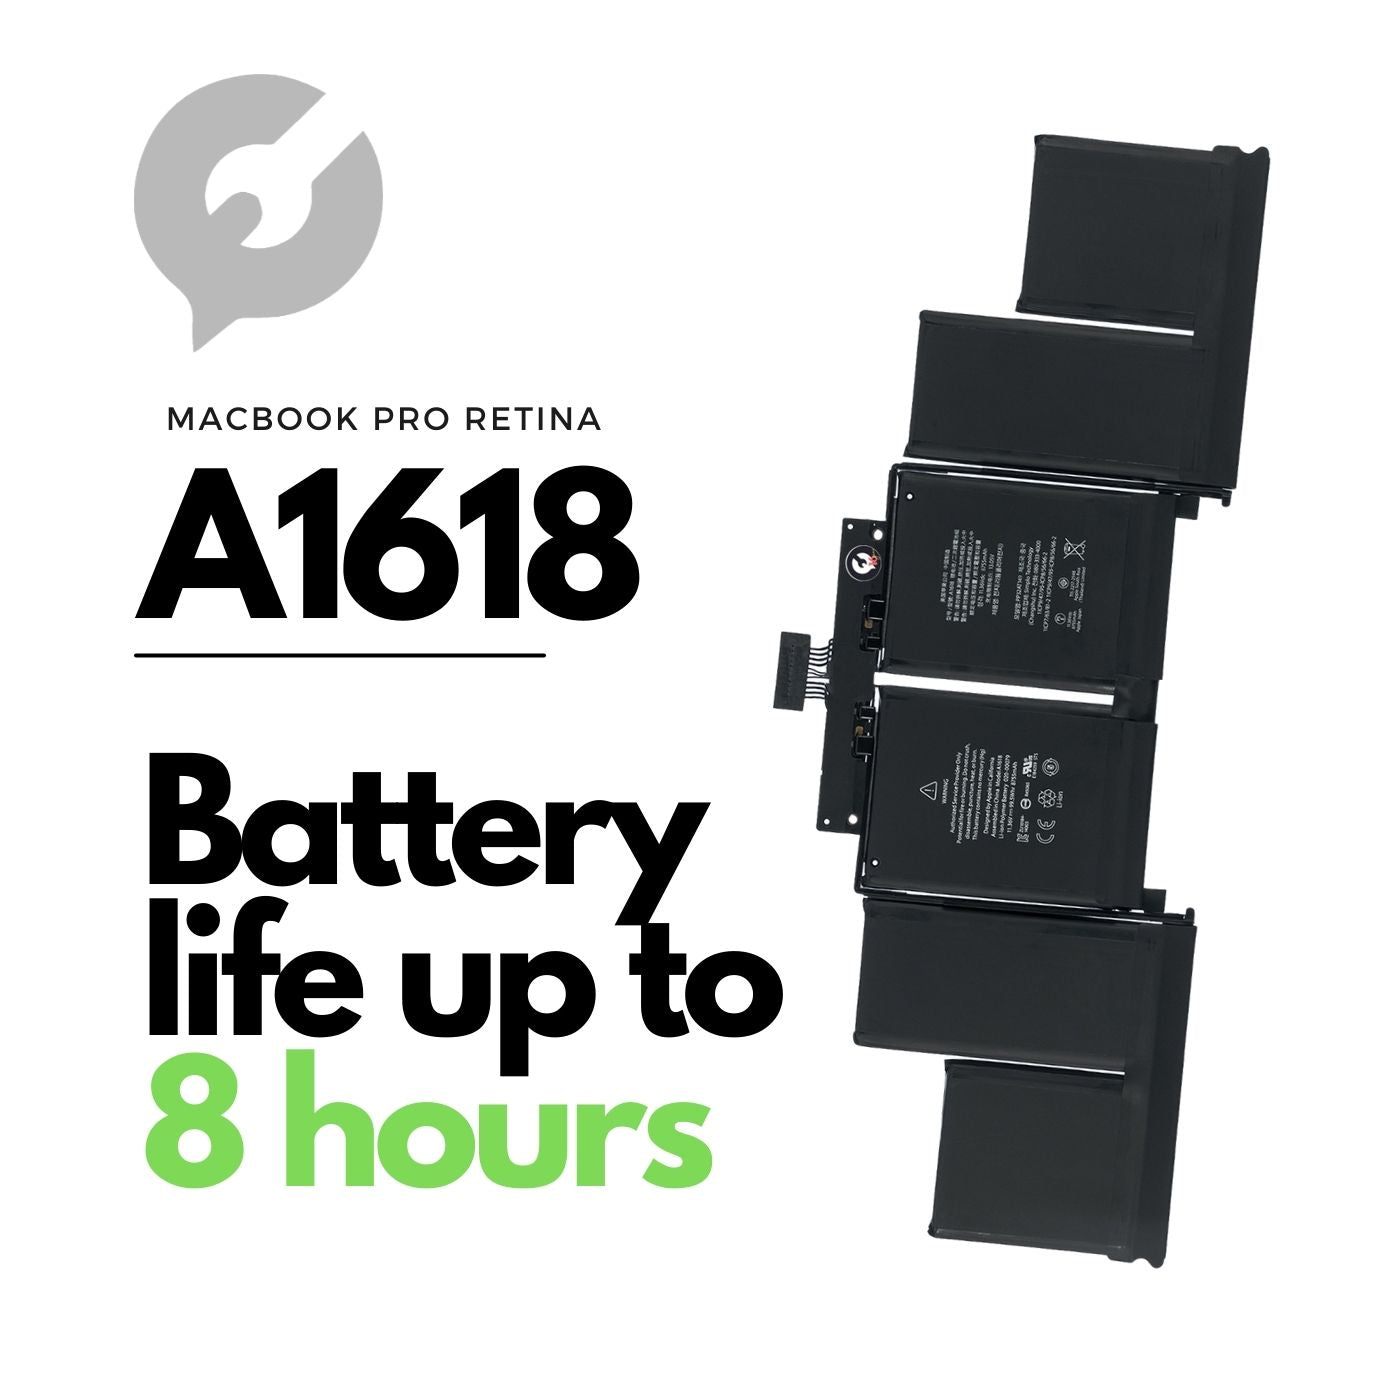 A1618 Avance Battery